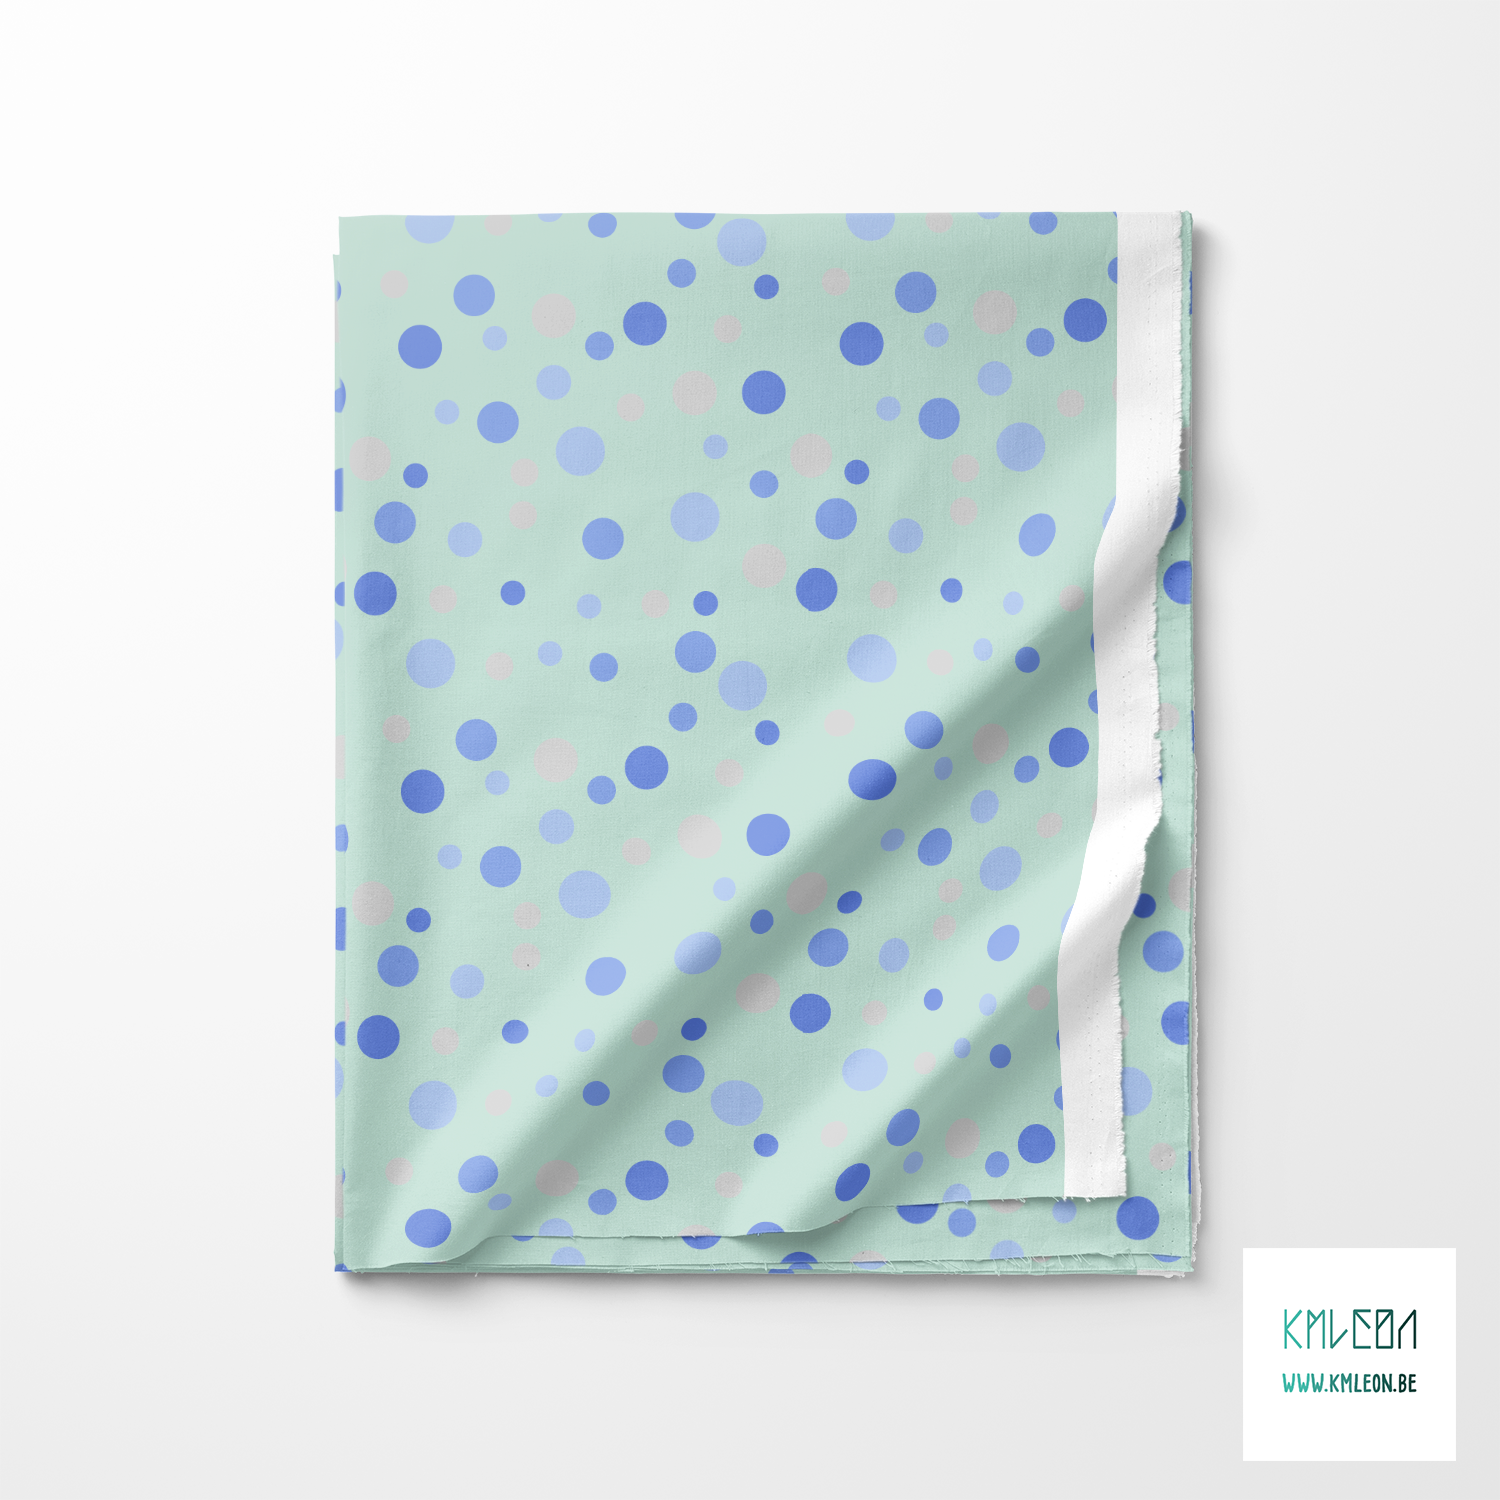 Random grey and periwinkle polka dots fabric